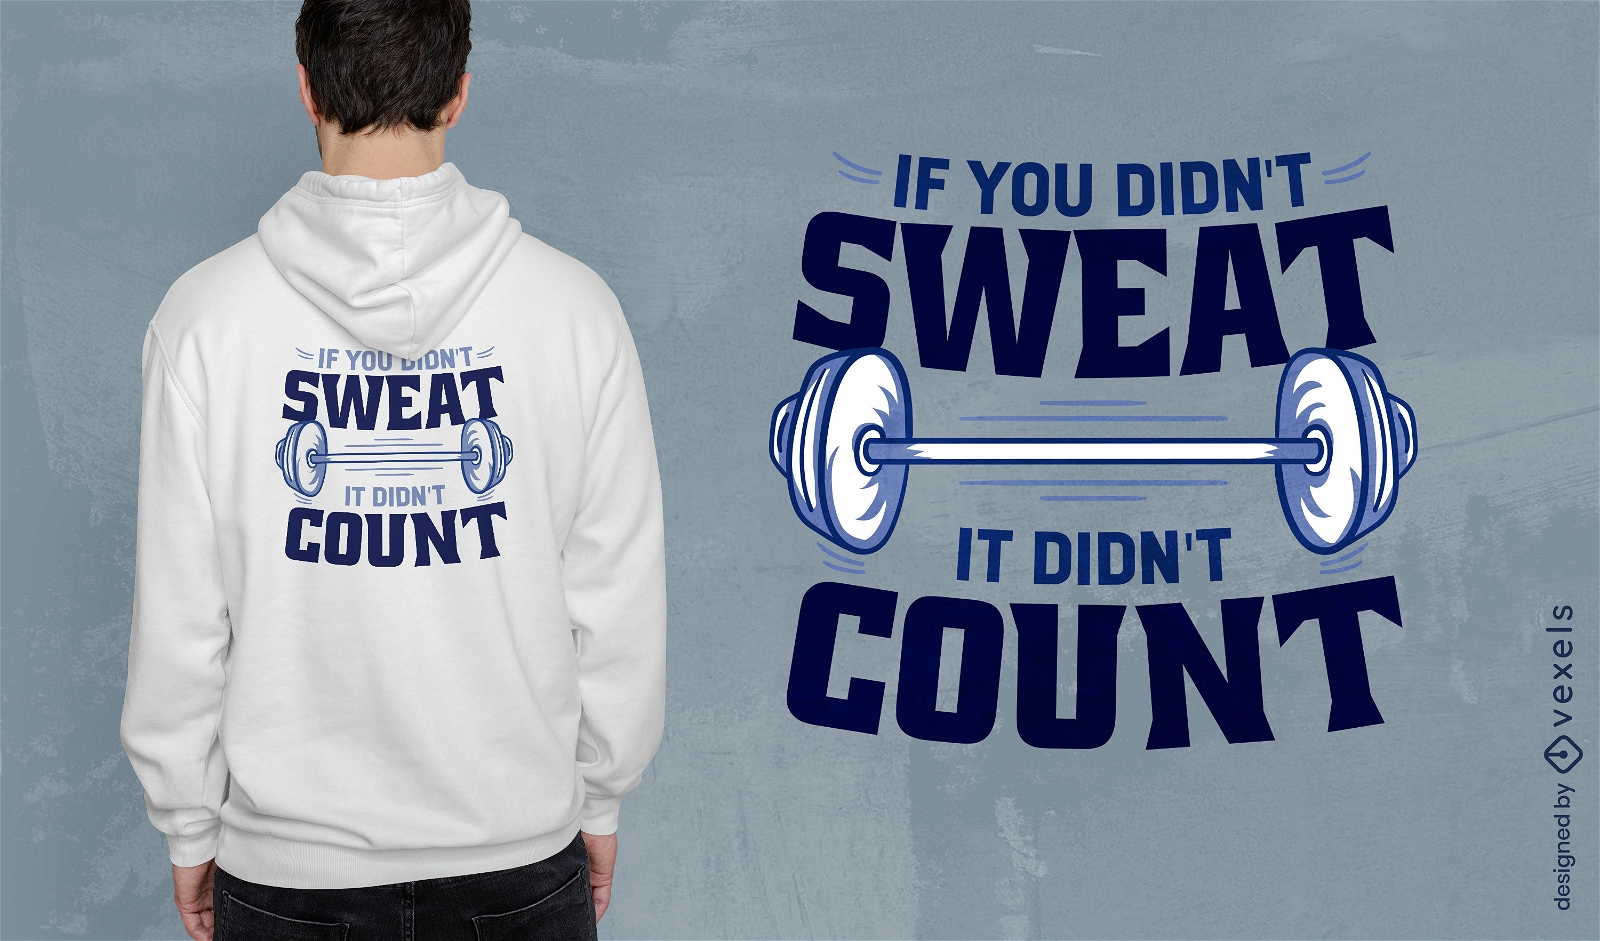 Sweat gym quote t-shirt design